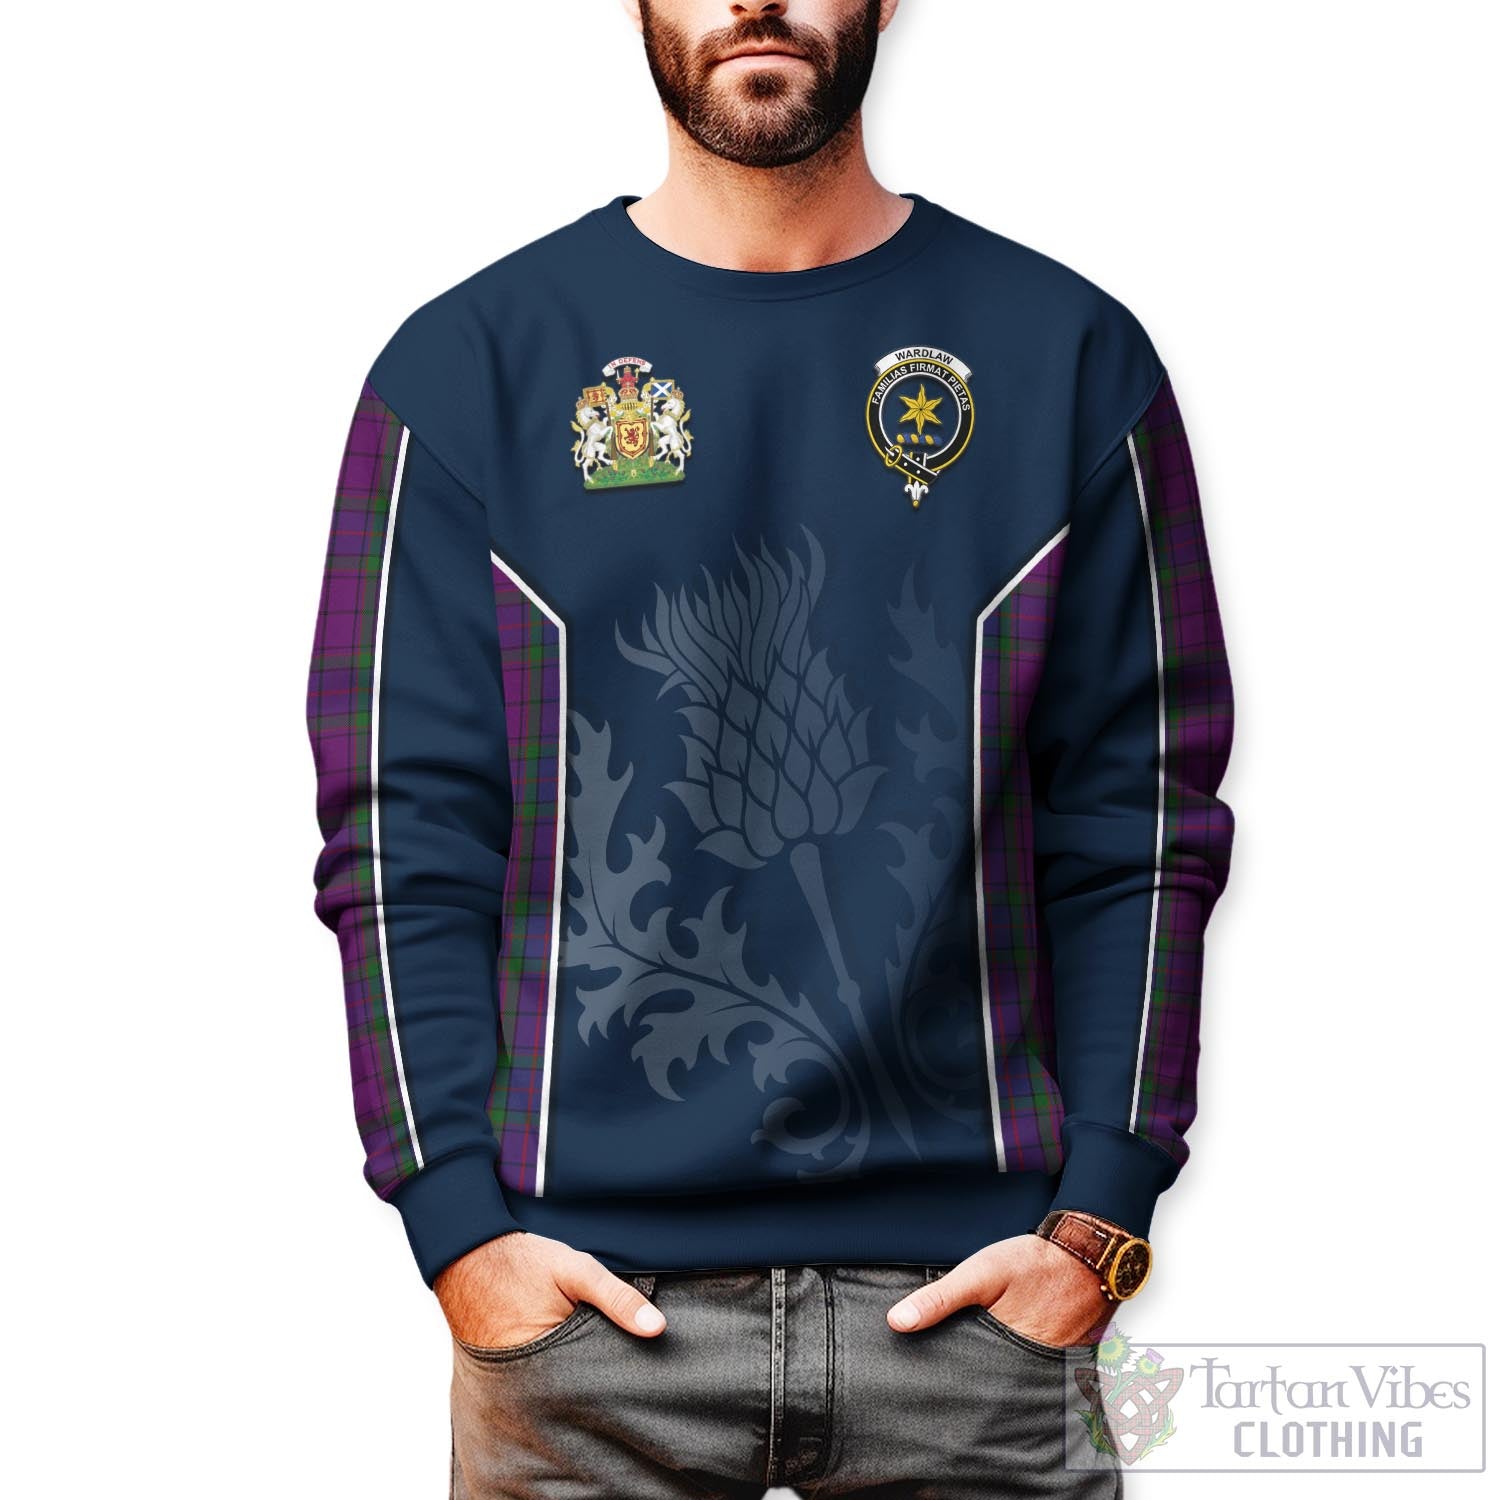 Tartan Vibes Clothing Wardlaw Tartan Sweatshirt with Family Crest and Scottish Thistle Vibes Sport Style